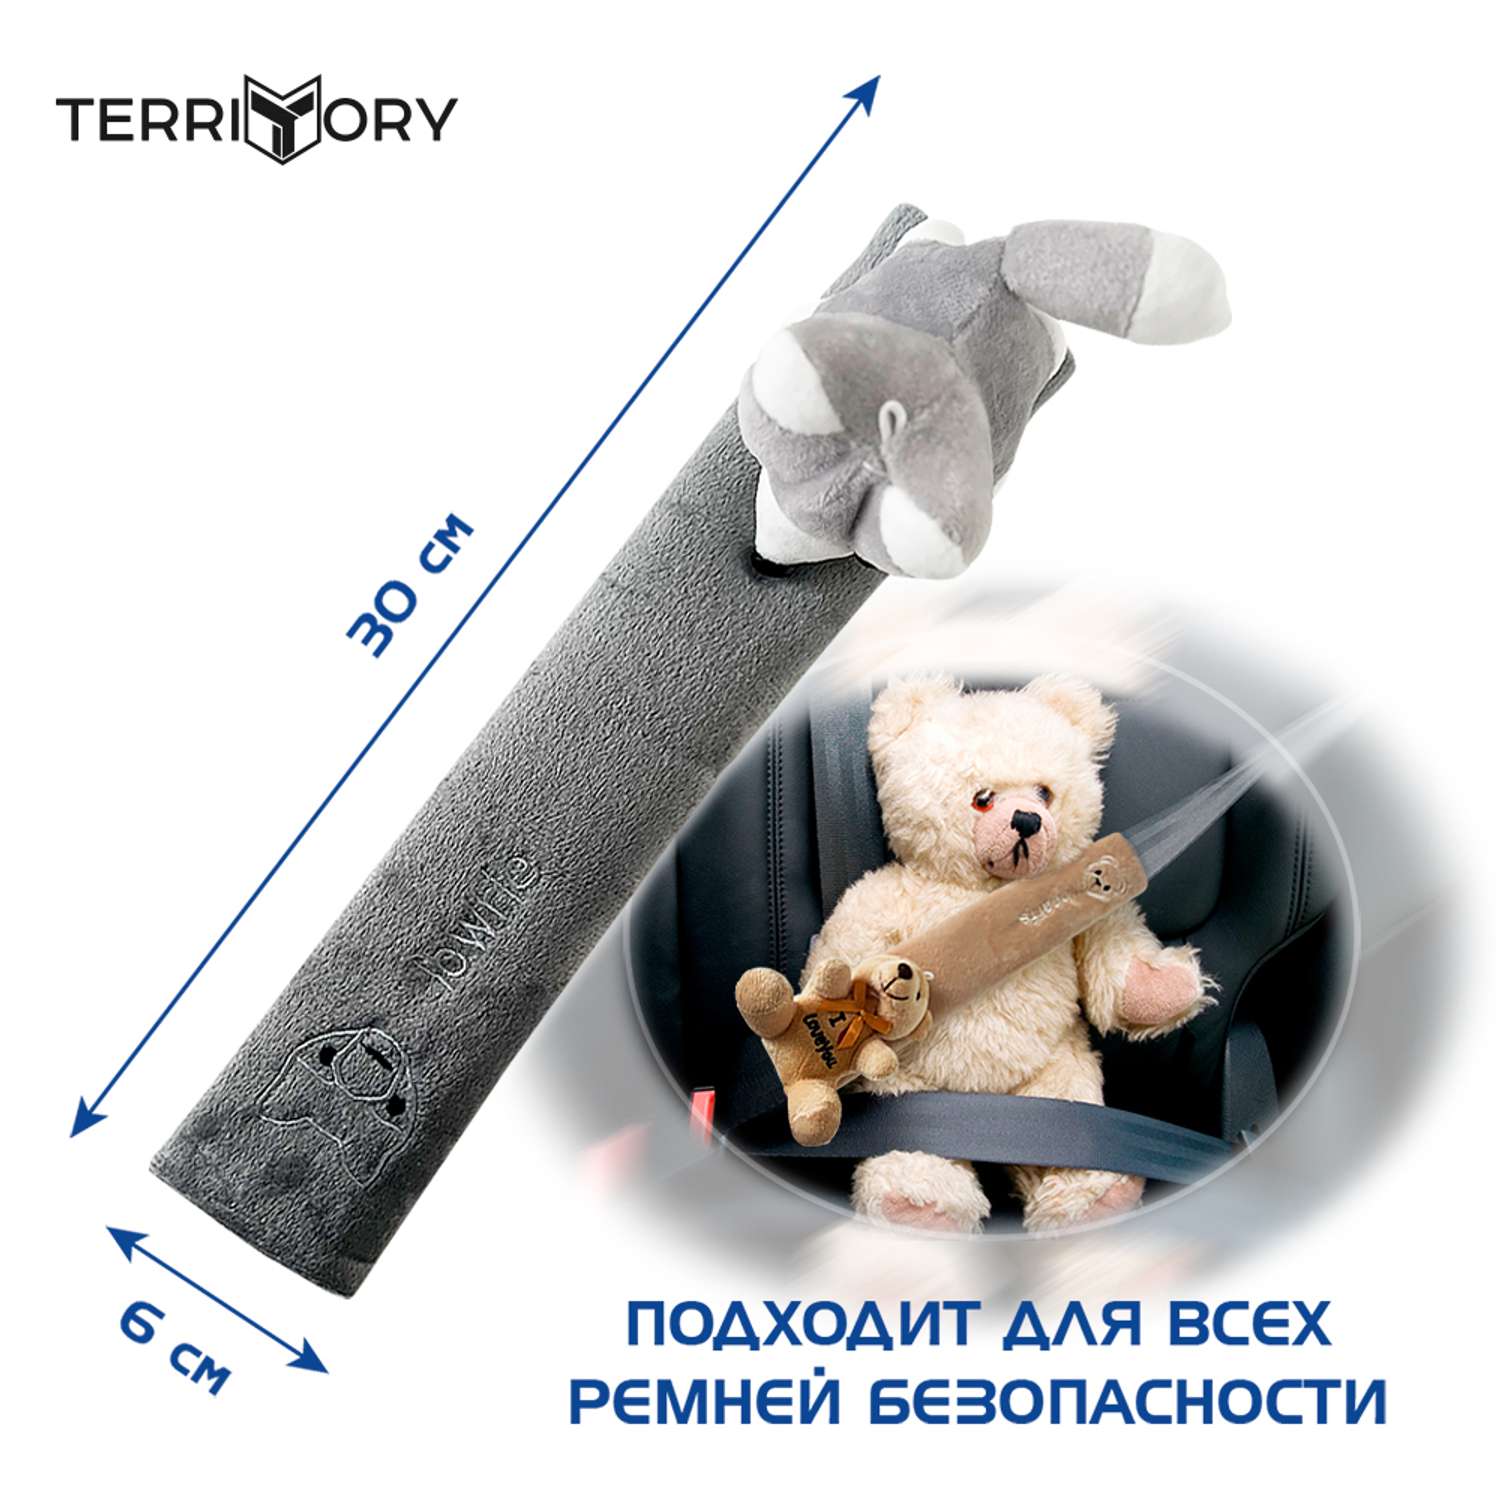 Накладка на ремень Territory безопасности детская с мягкой игрушкой лисичка - фото 4